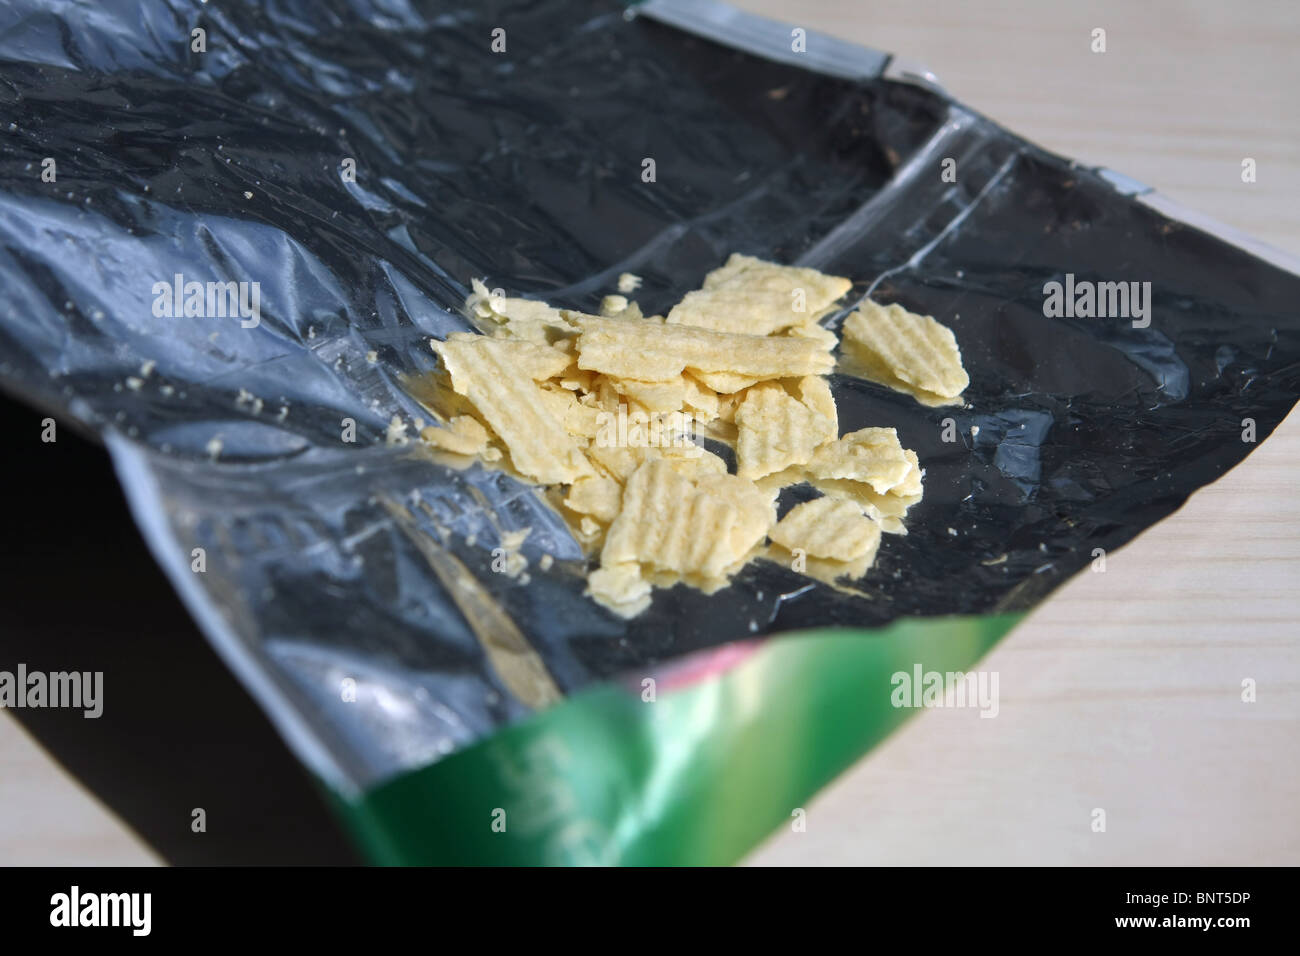 a few bits of crisps left in a torn open crisp bag Stock Photo